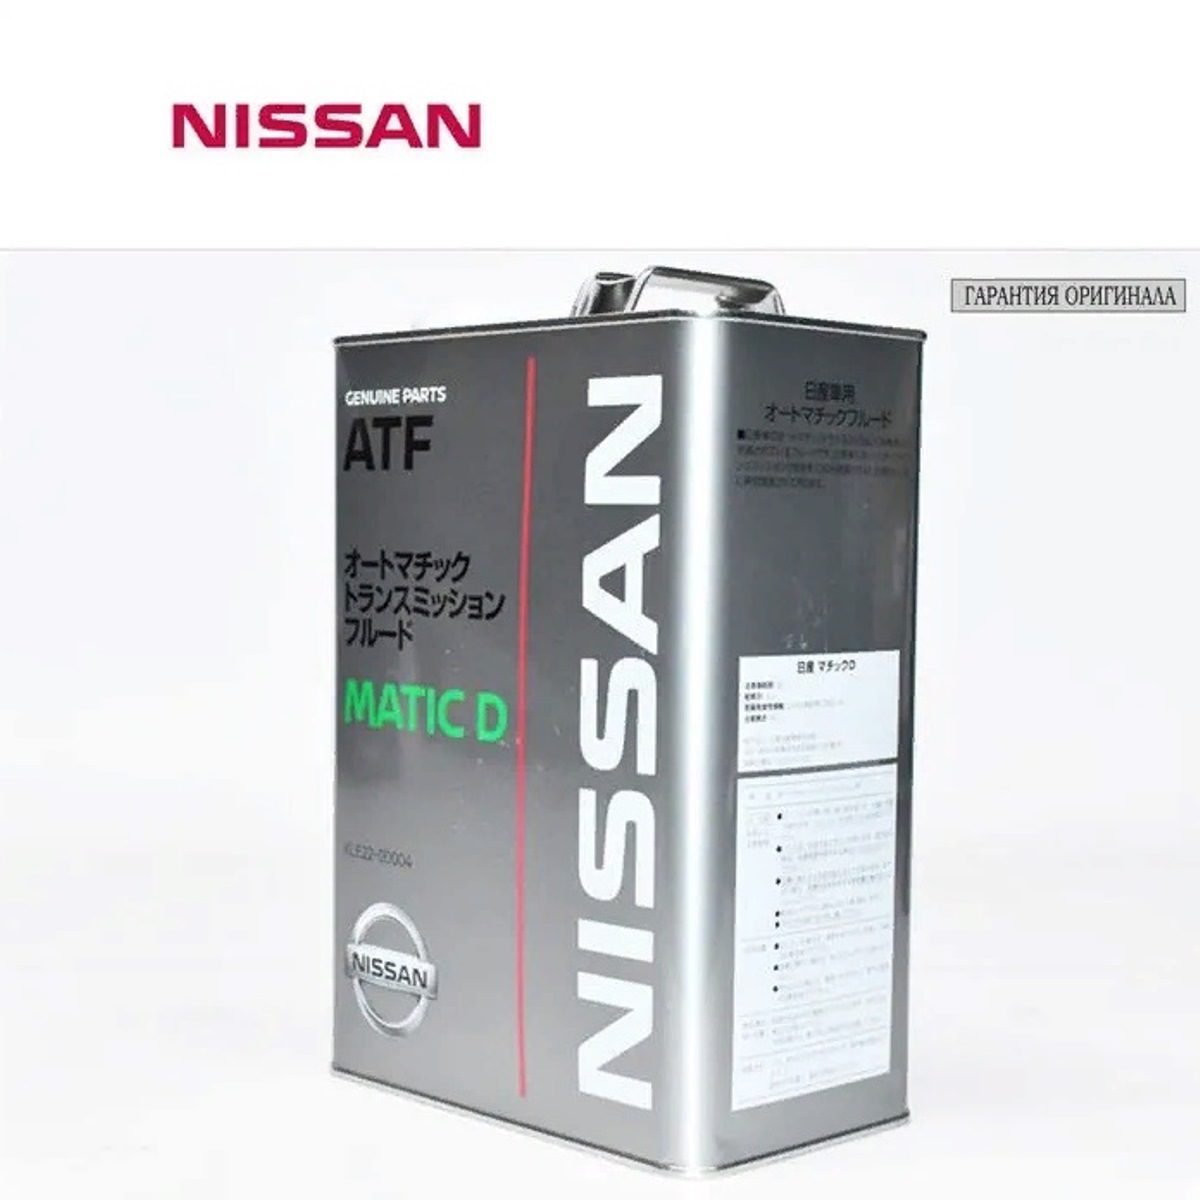 Масло транс. для АКПП Nissan AT-MATIC D FLUID (4л) (Япония)